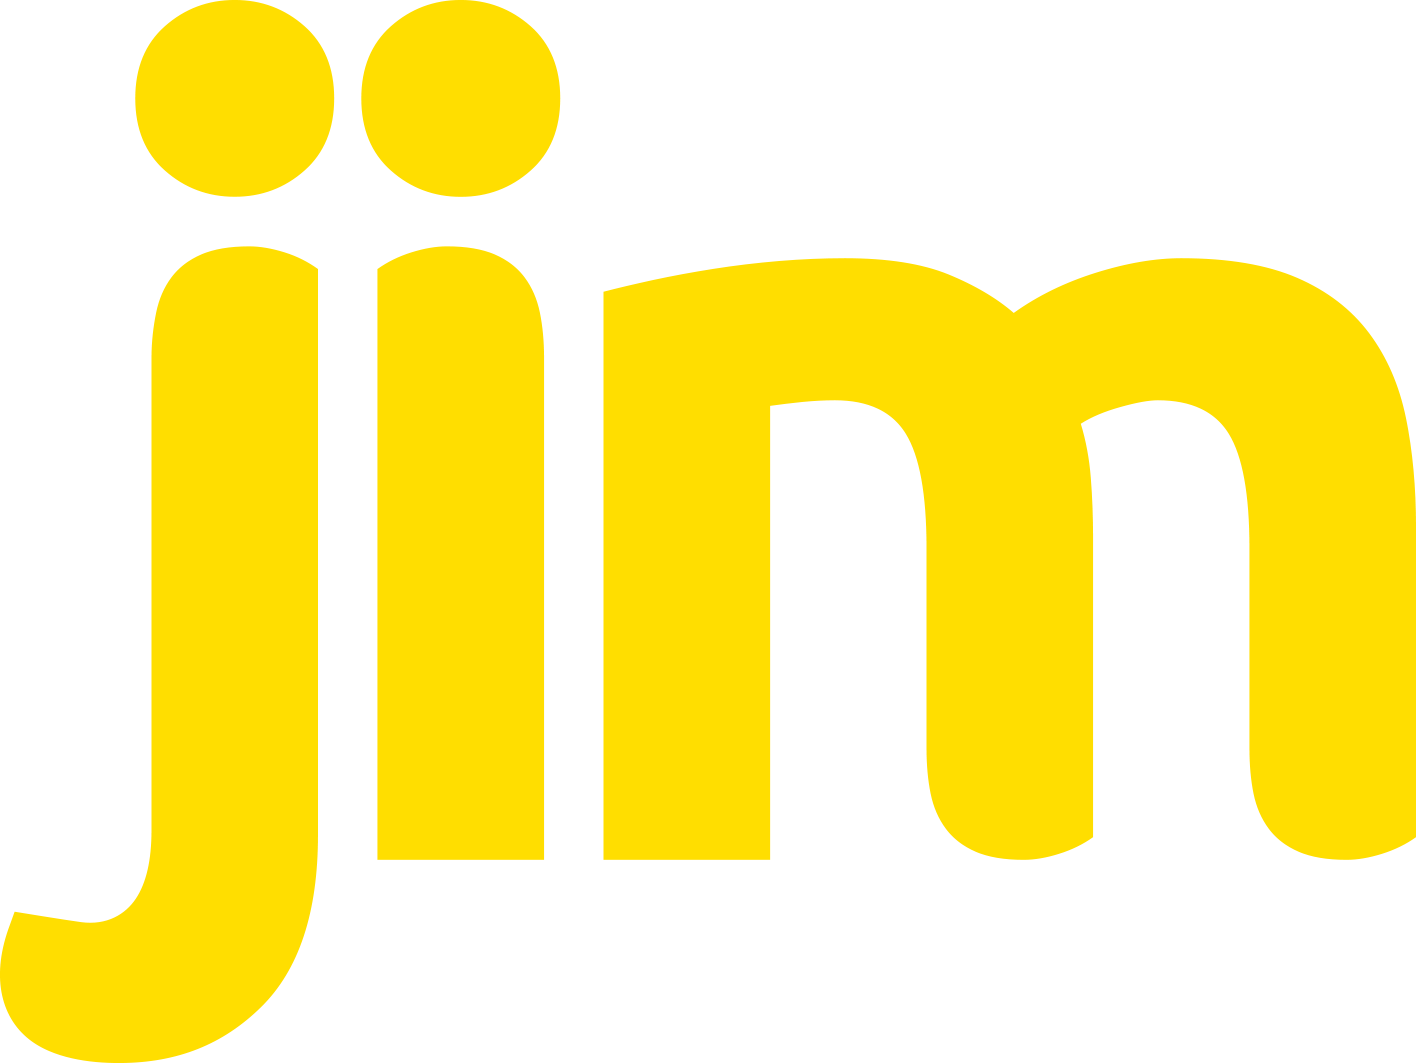 Jim Logo - Image - Jim keltainen.png | Logopedia | FANDOM powered by Wikia